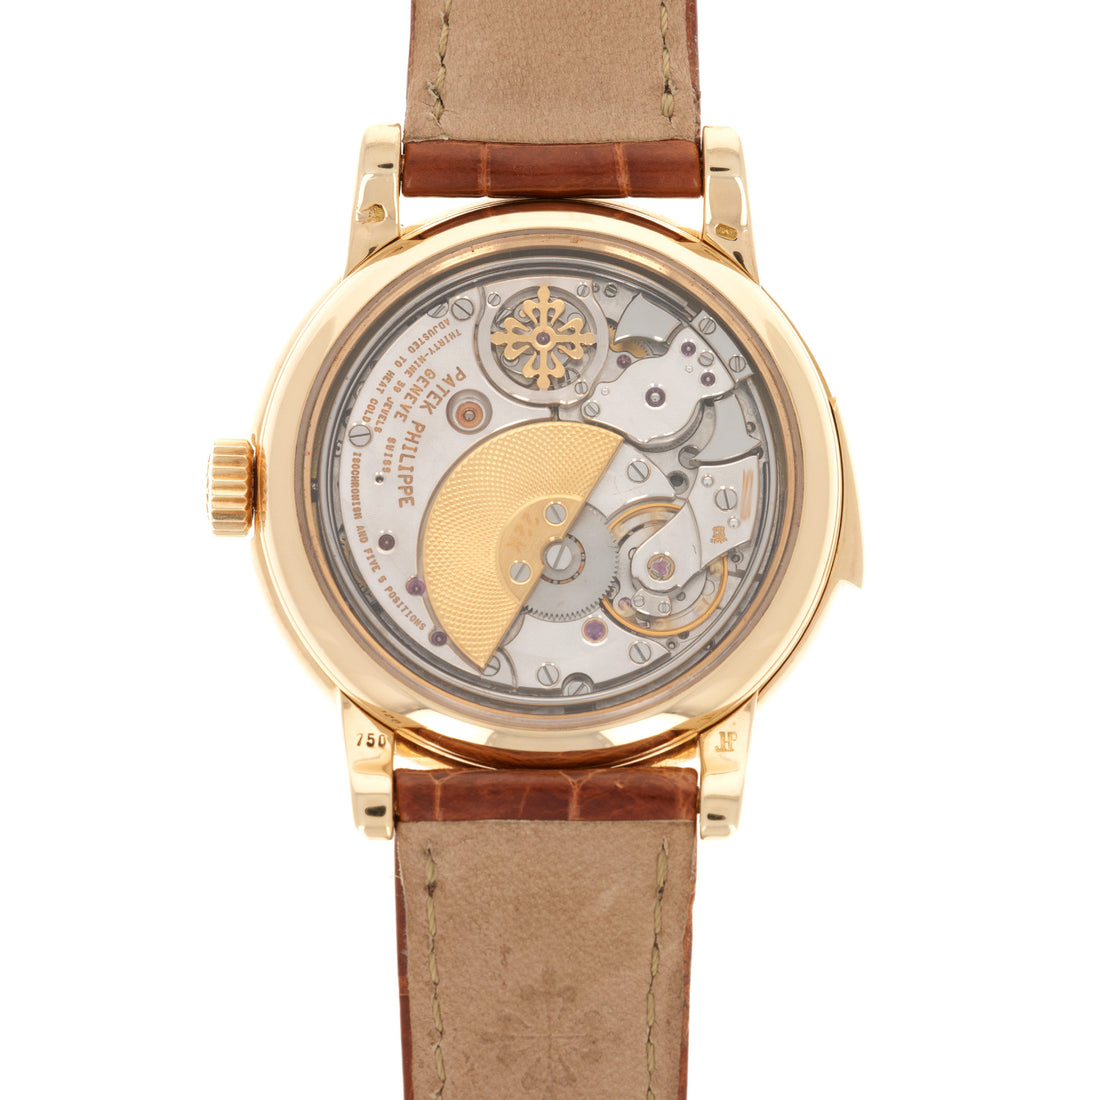 Patek Philippe Yellow Gold Perpetual Calendar Minute Repeater Watch Ref. 3974